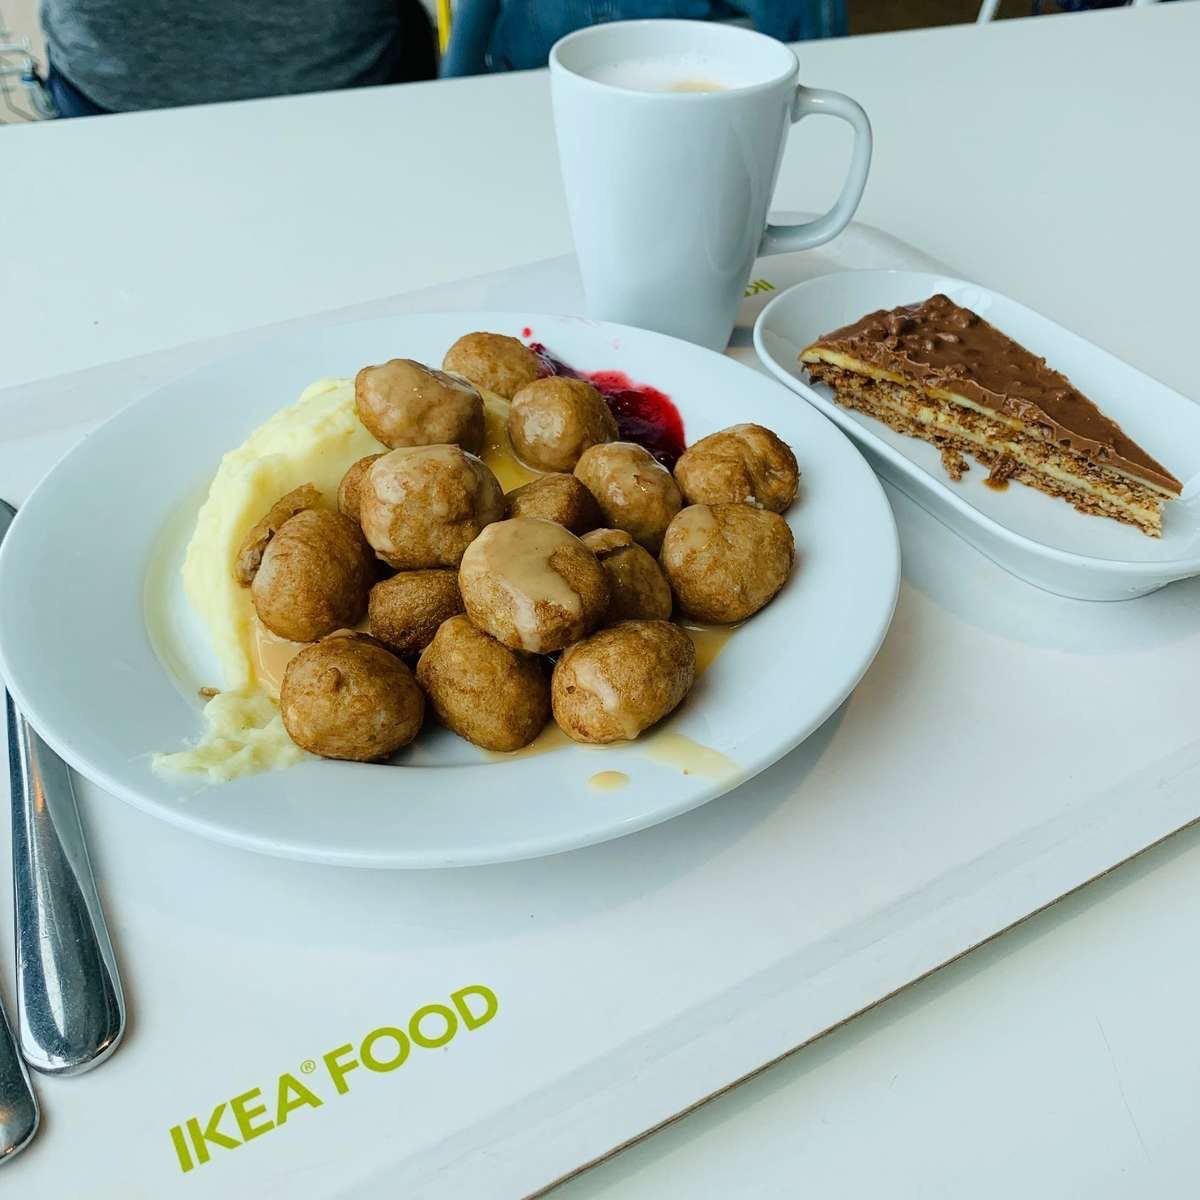 IKEA Restaurant  Caf - Tempe - Broome Tourism